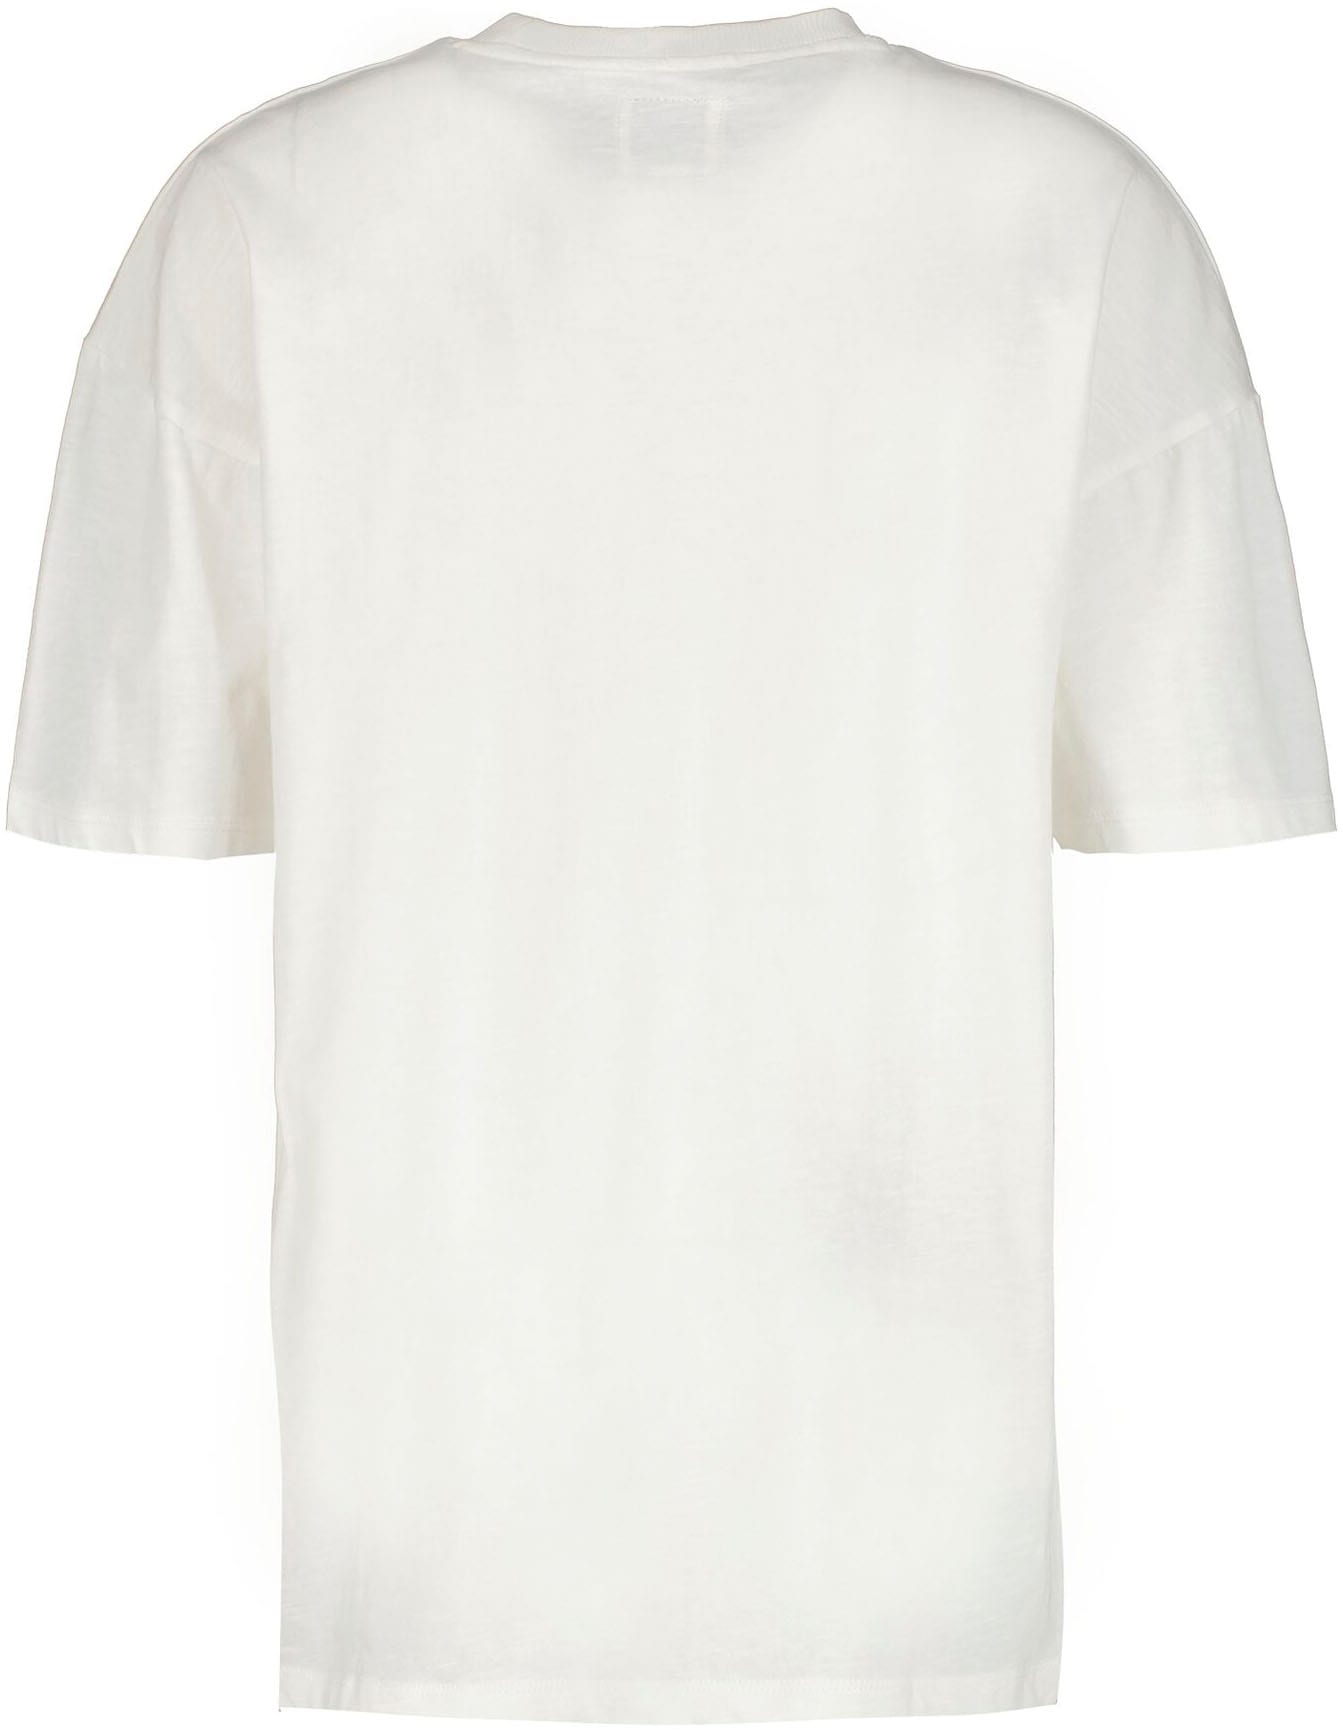 OTTO for Garcia online T-Shirt, BOYS bei